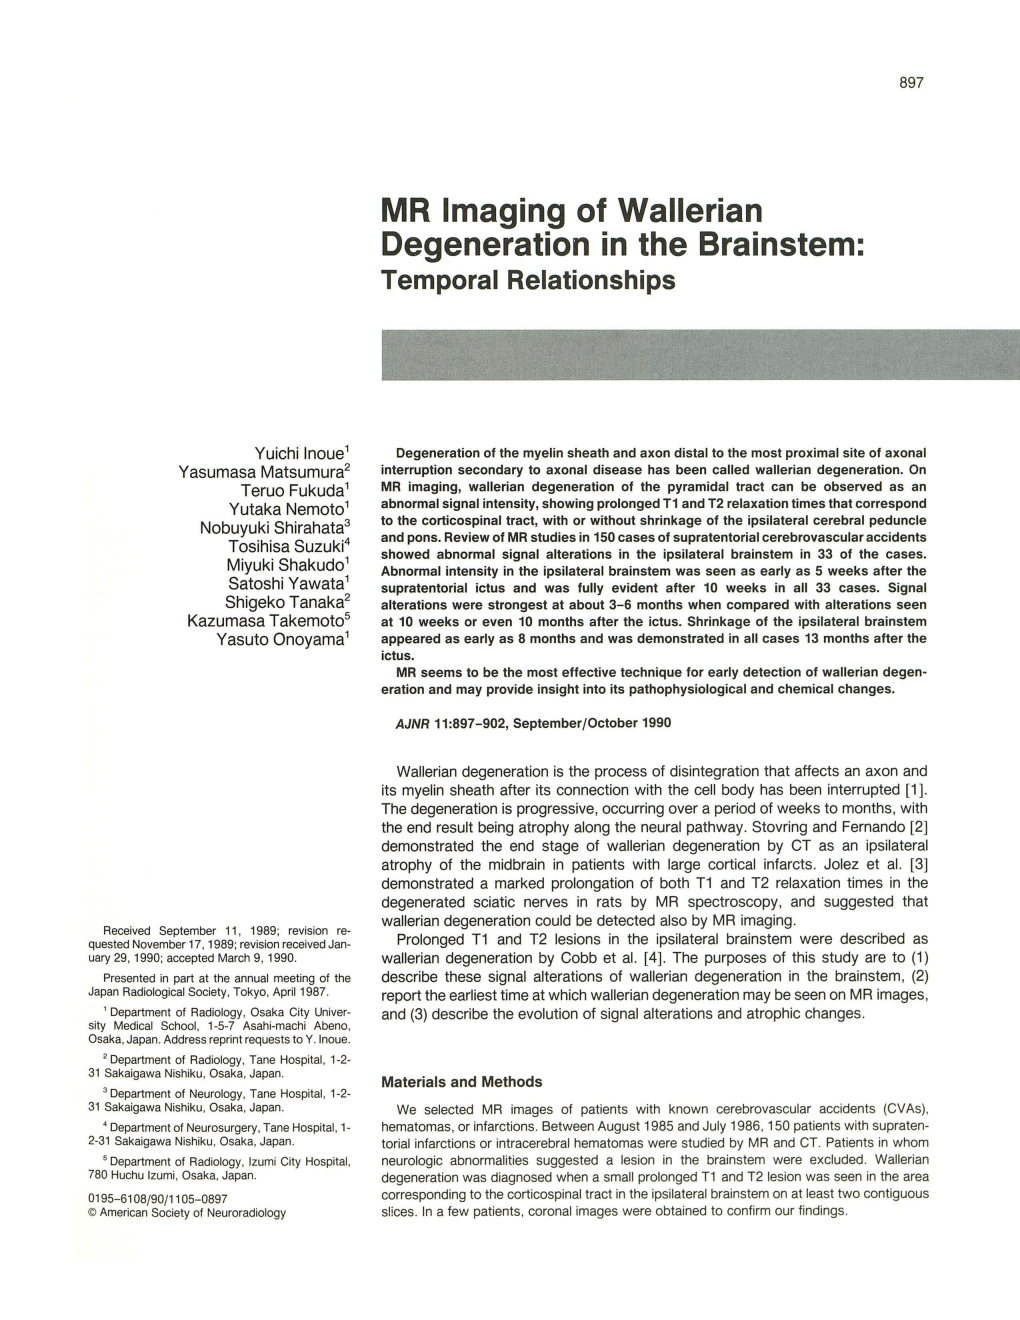 MR Imaging of Wallerian Degeneration in the Brainstem: Temporal Relationships